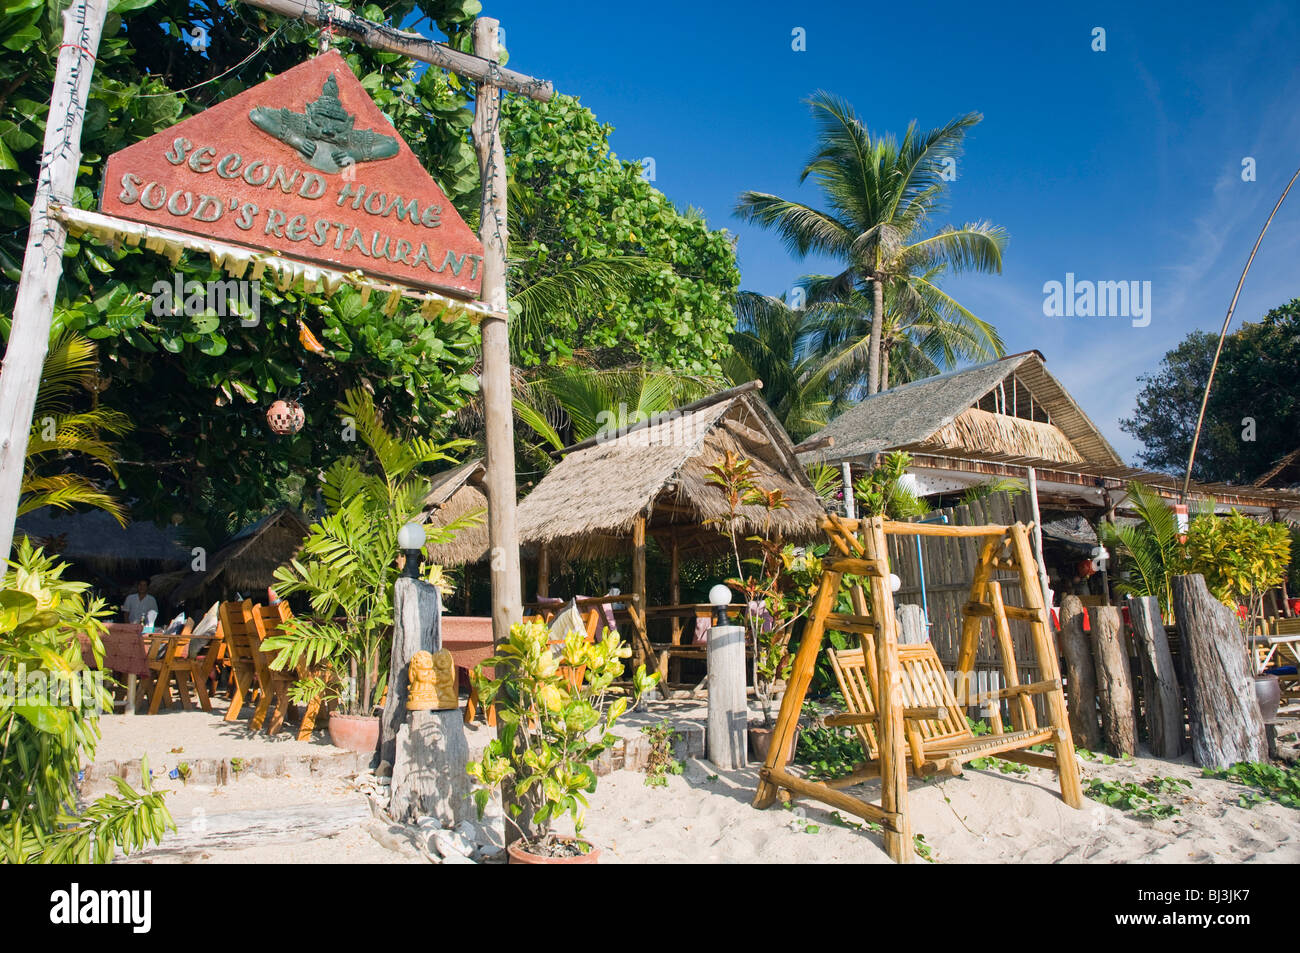 Secondo Home Ristorante sulla spiaggia, lunga spiaggia, Phra Ae Beach, isola di Ko Lanta, Koh Lanta, Krabi, Thailandia, Asia Foto Stock